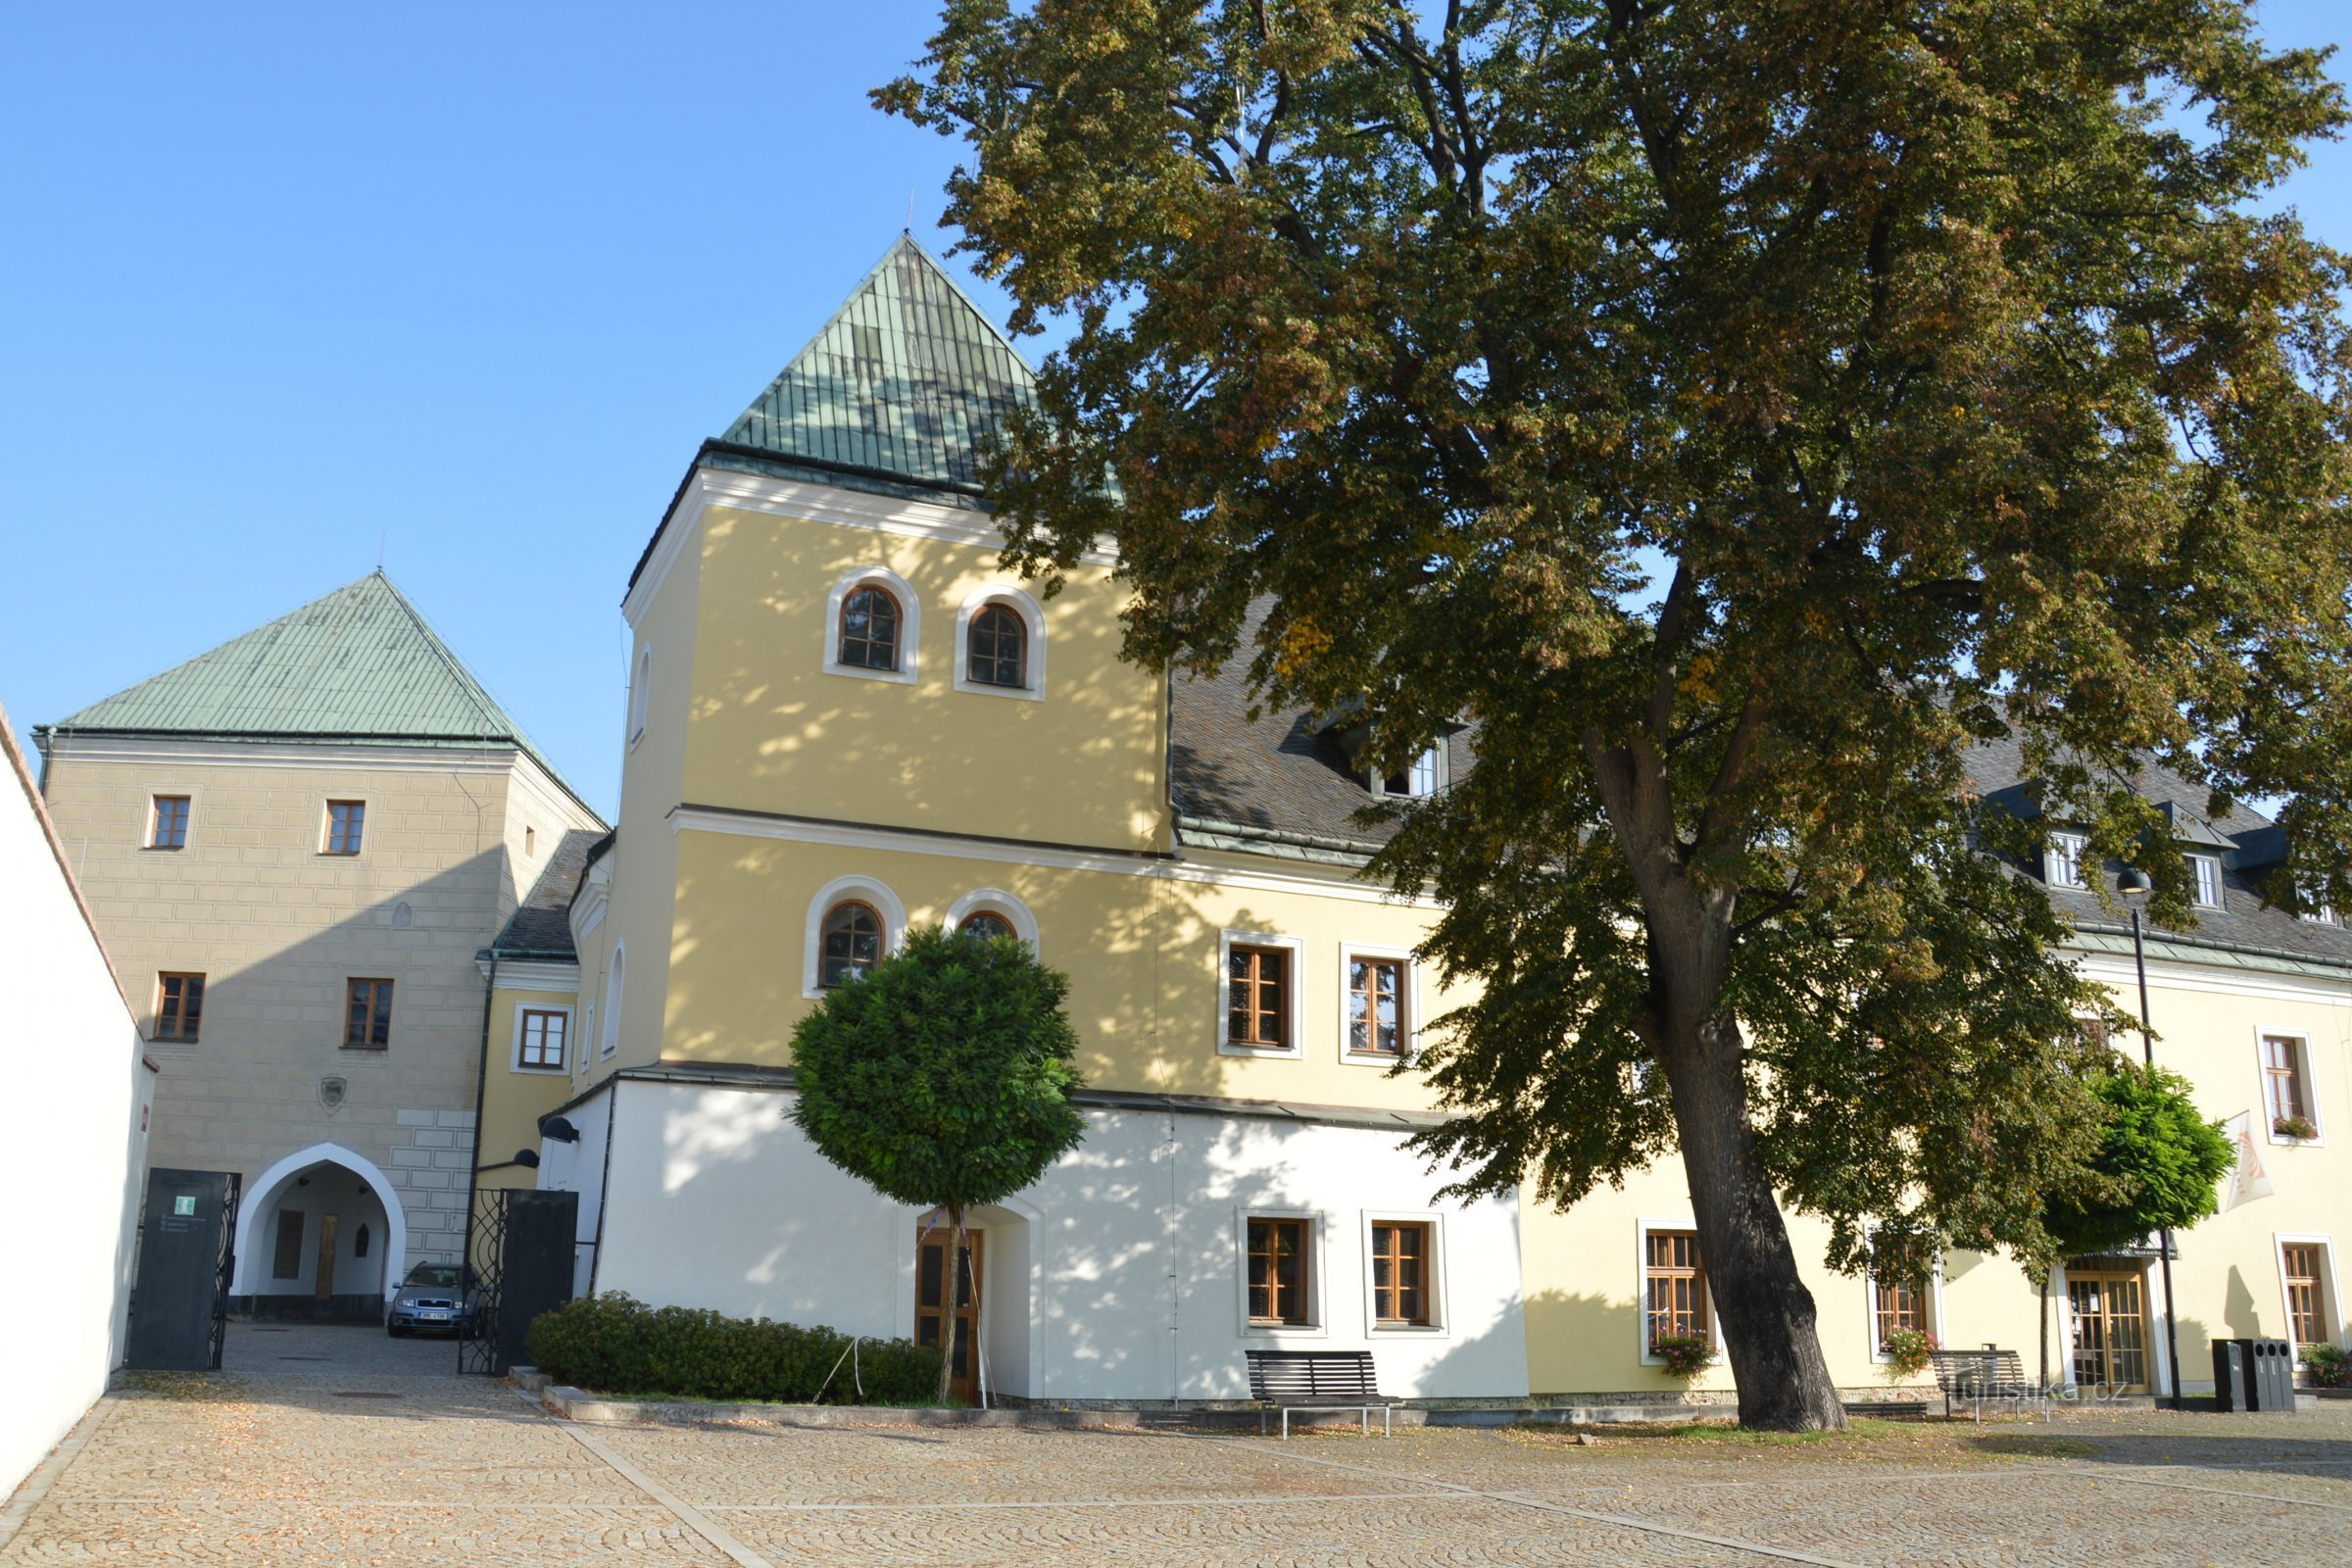 Velká Bystřice, μέρος του κάστρου